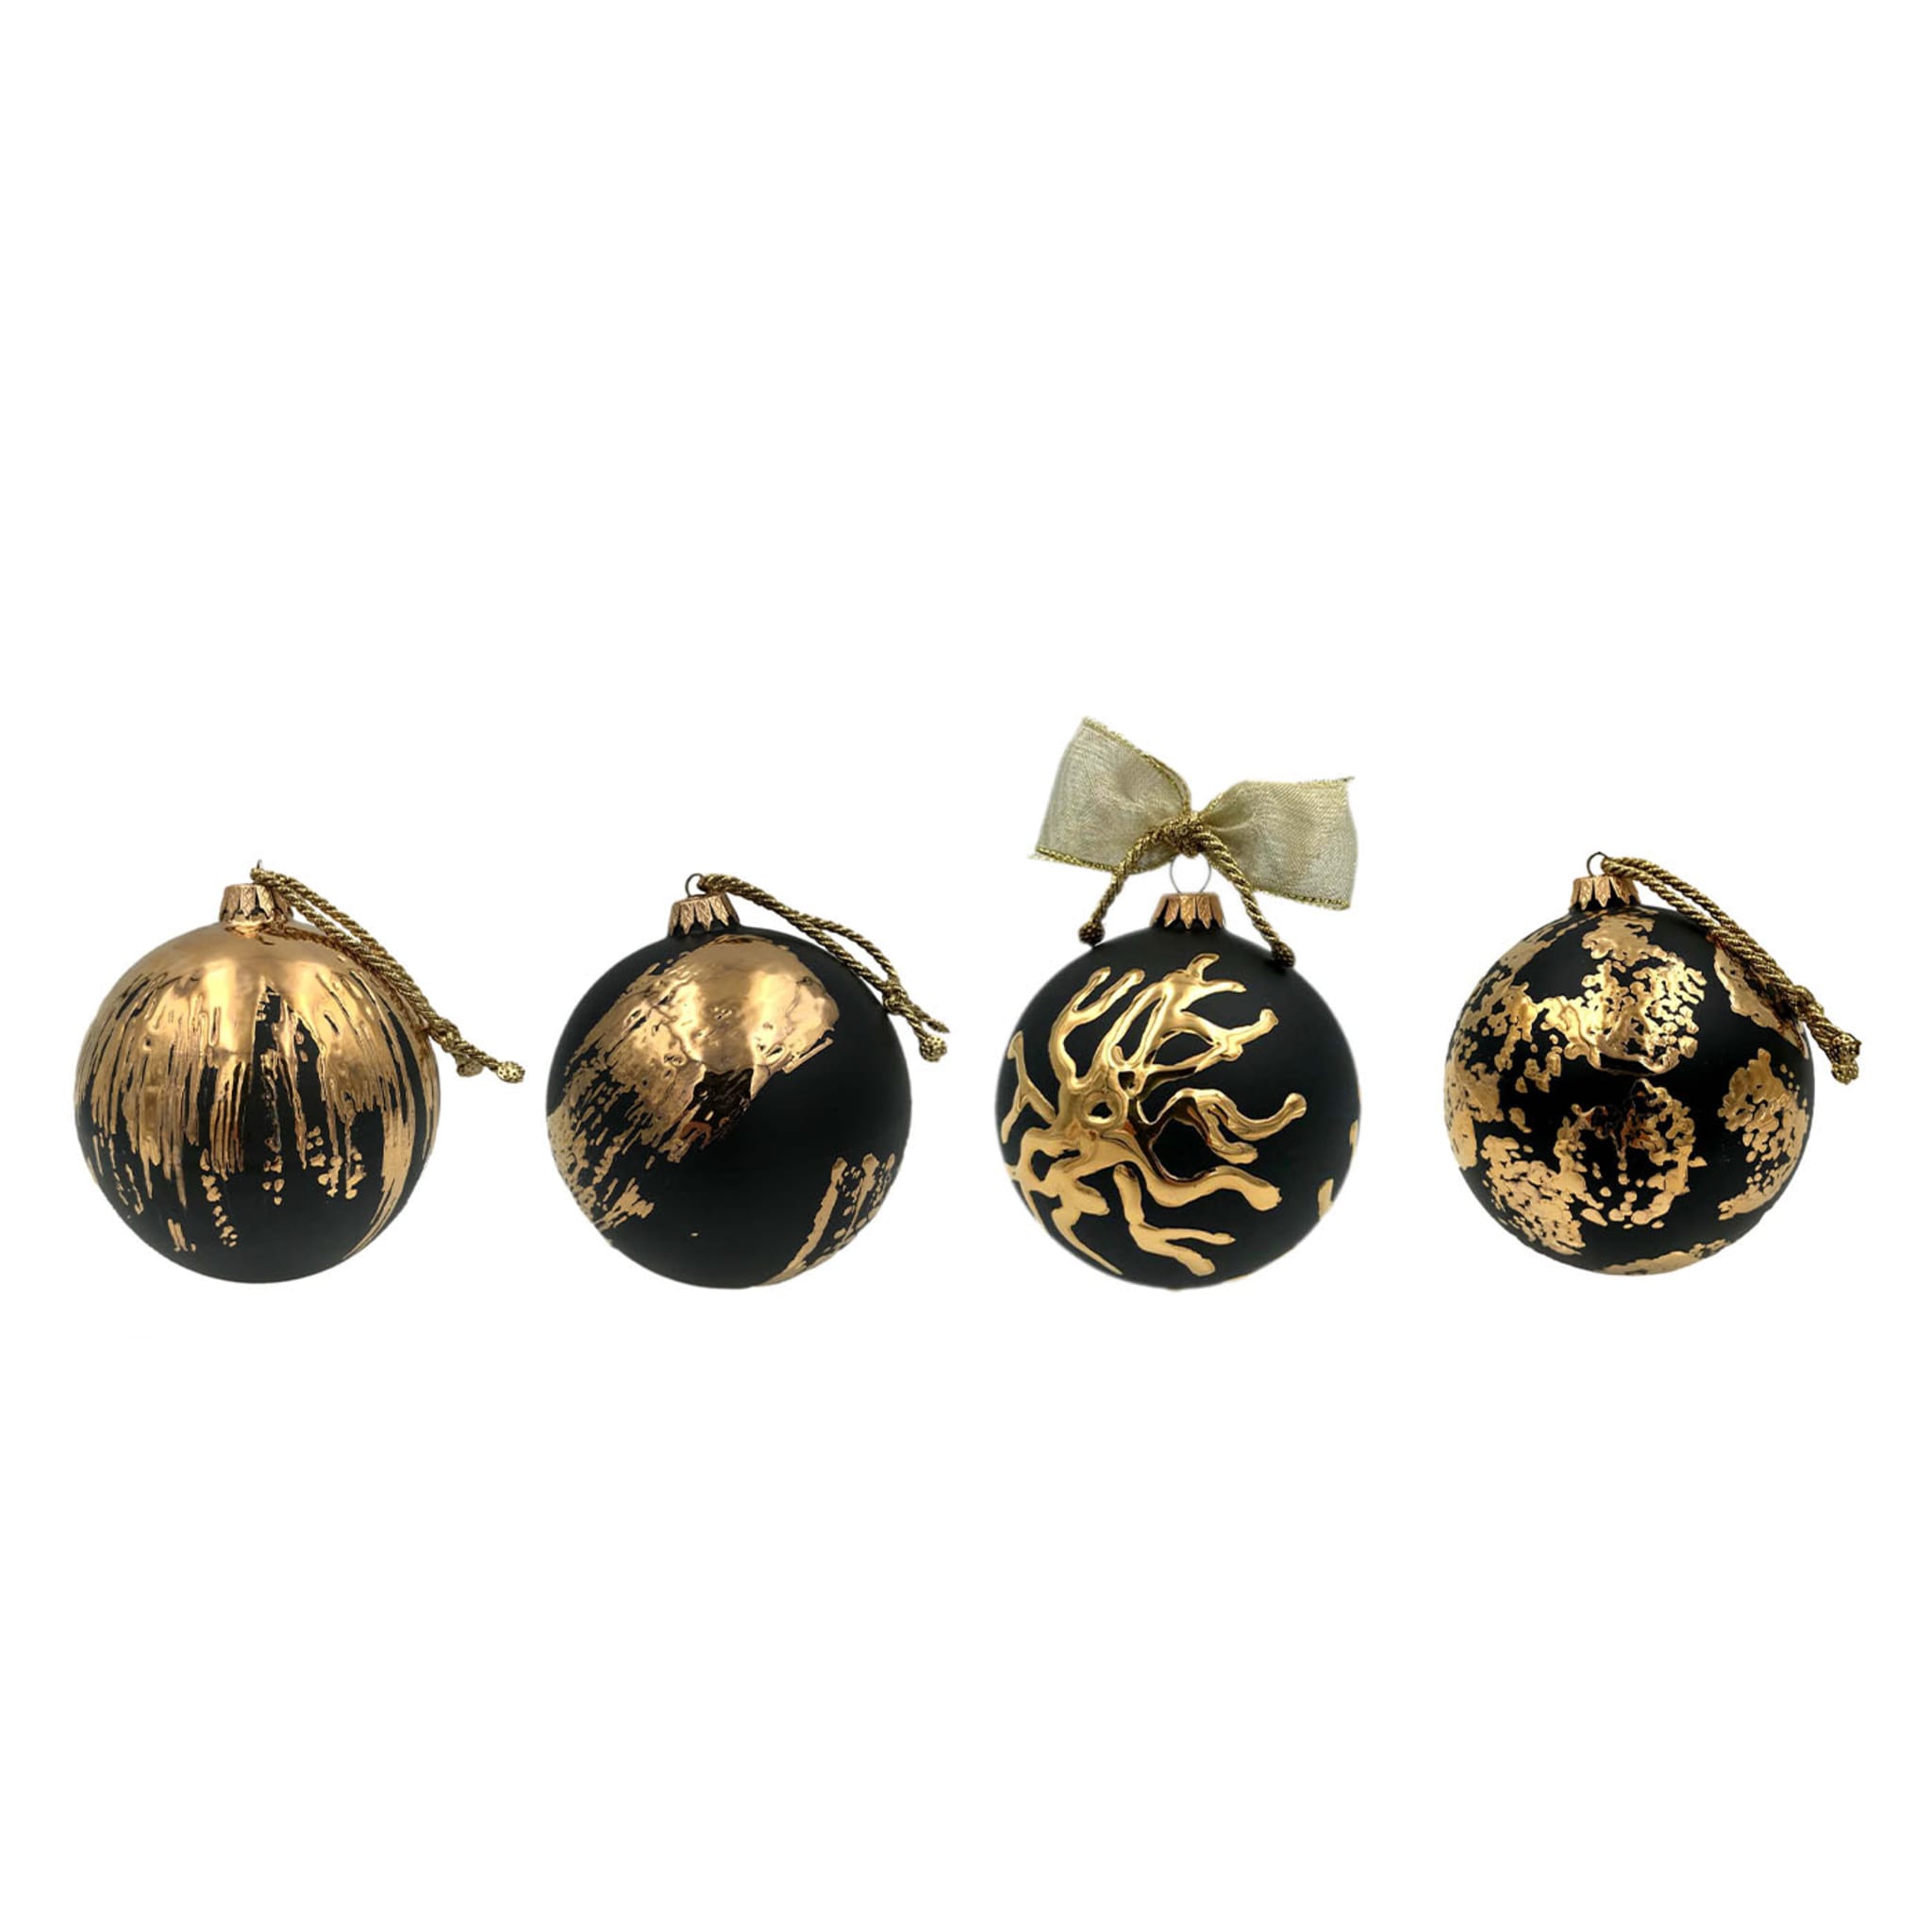 Colata Ceramic Christmas Ornament Black and Gold - Alternative view 1